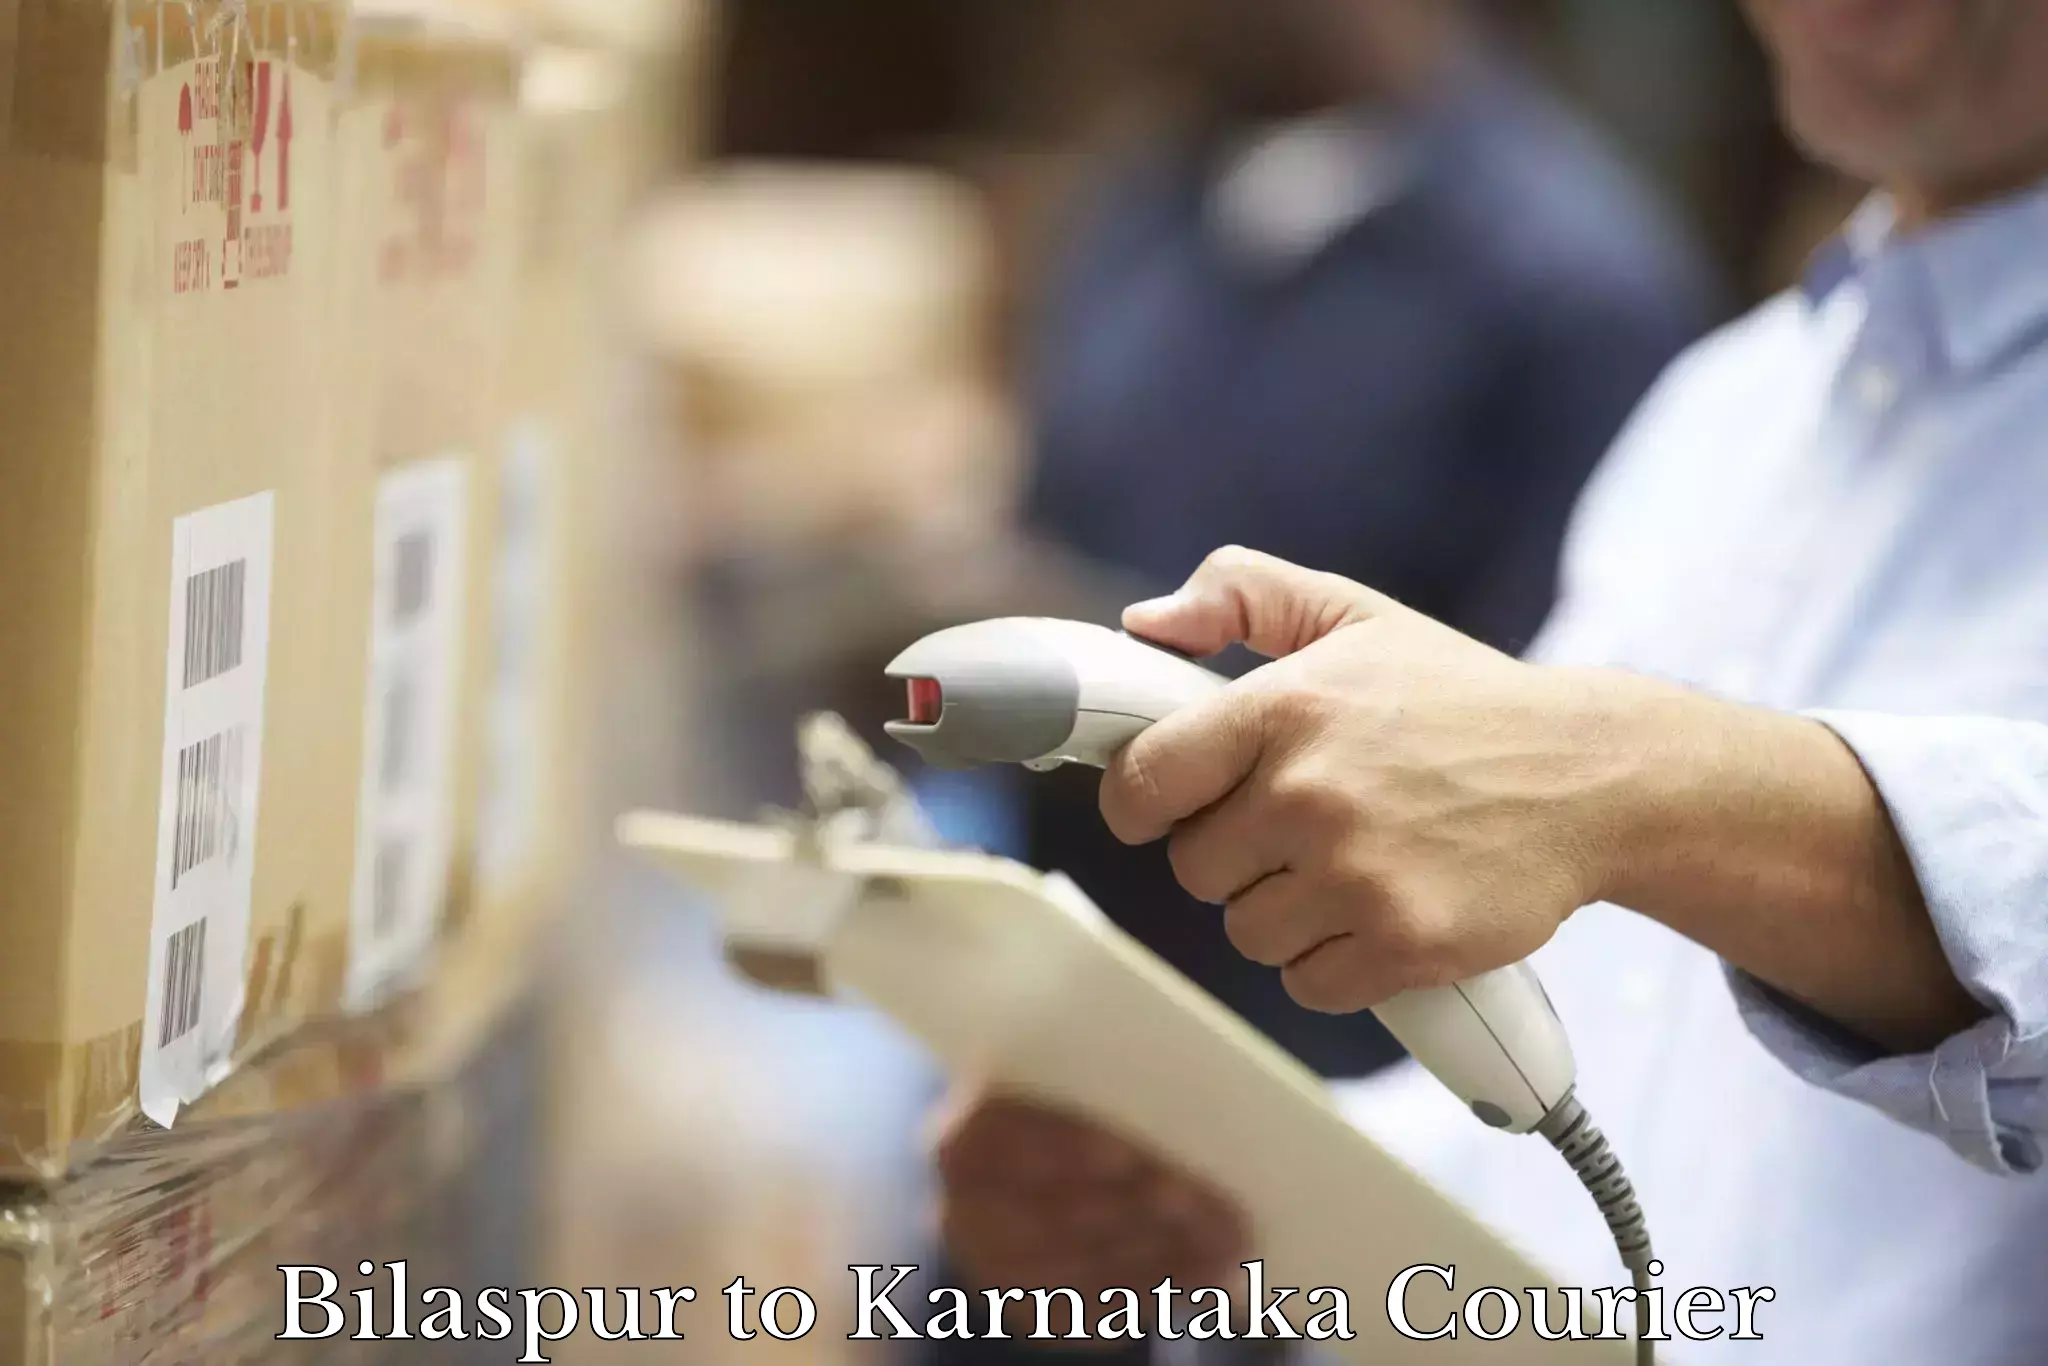 Courier app Bilaspur to Karnataka